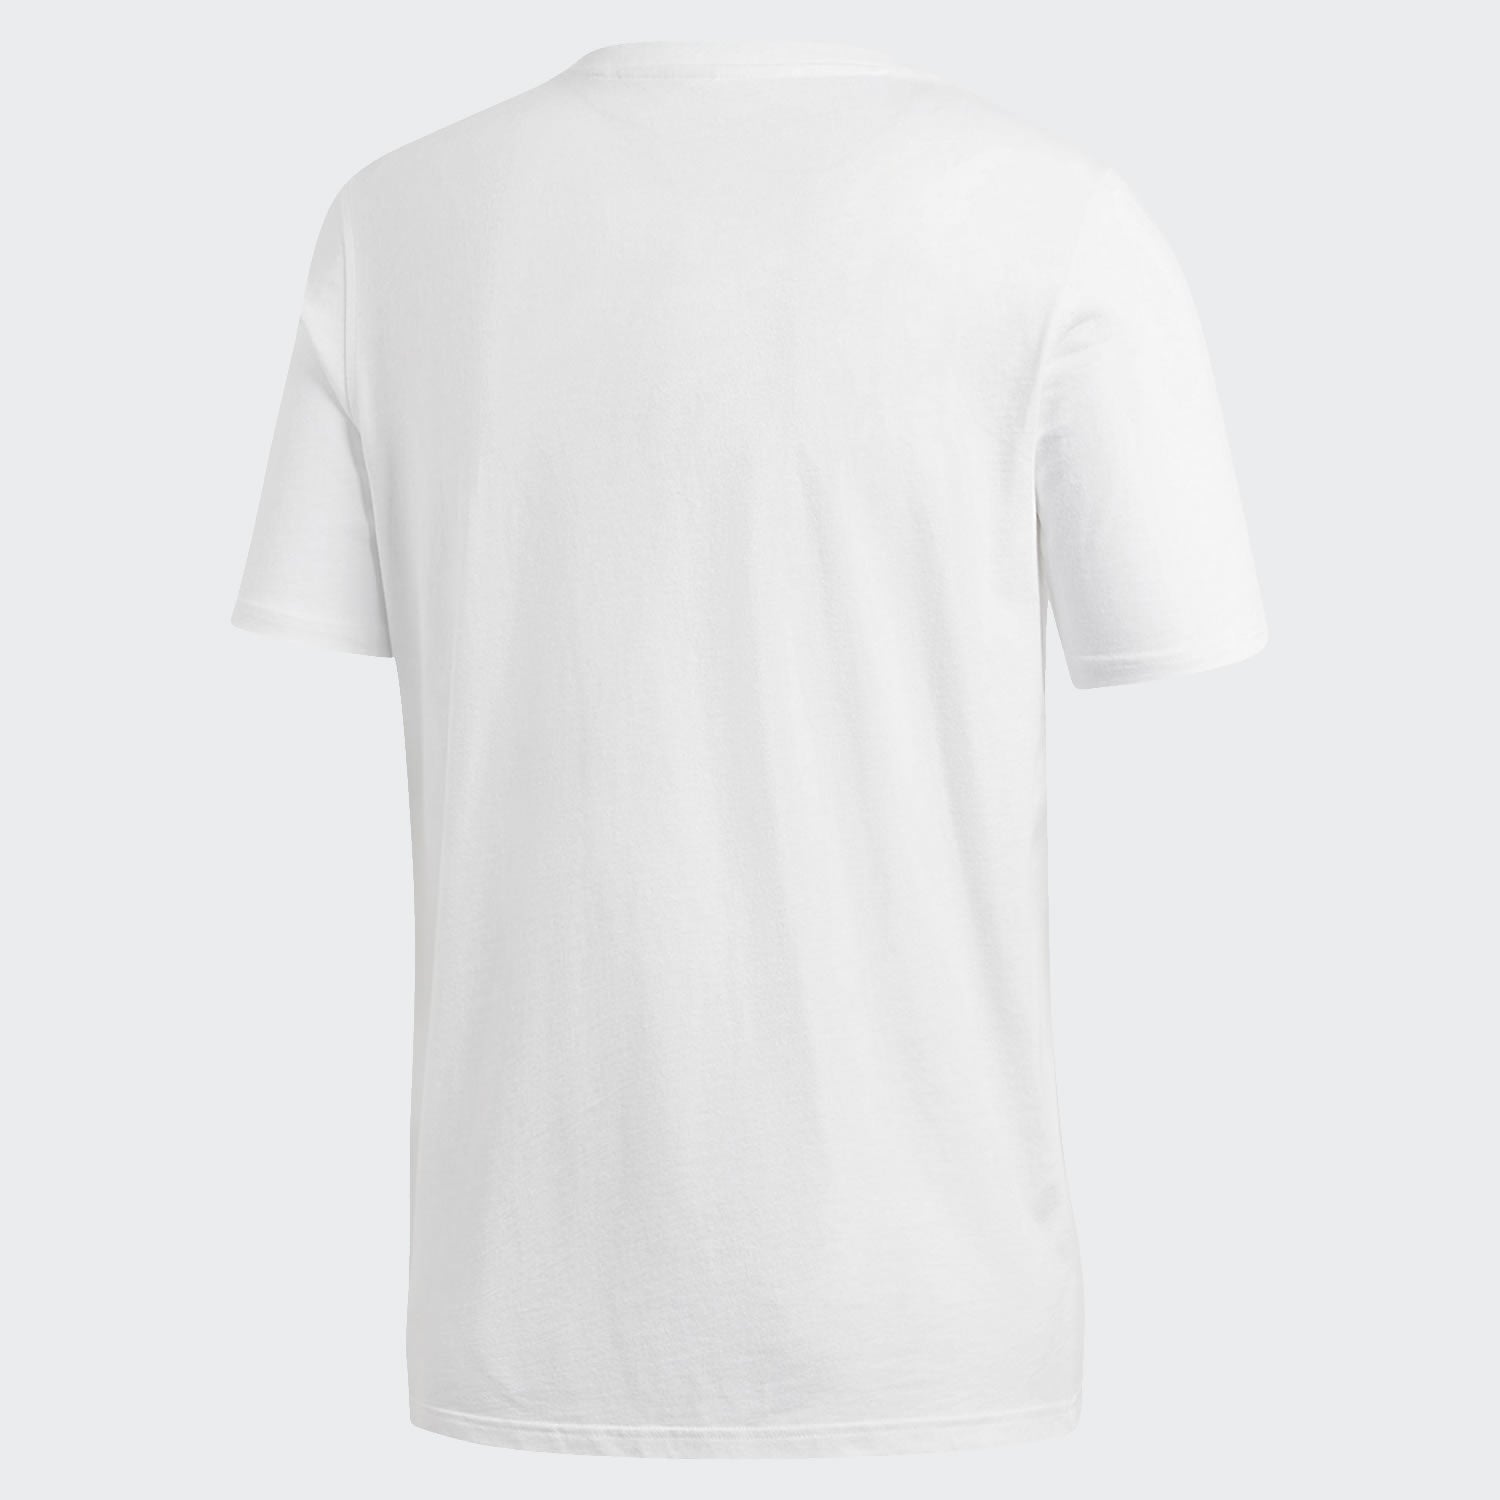 tradesports.co.uk adidas Men's Crew Neck Trefoil T-Shirt DH5772